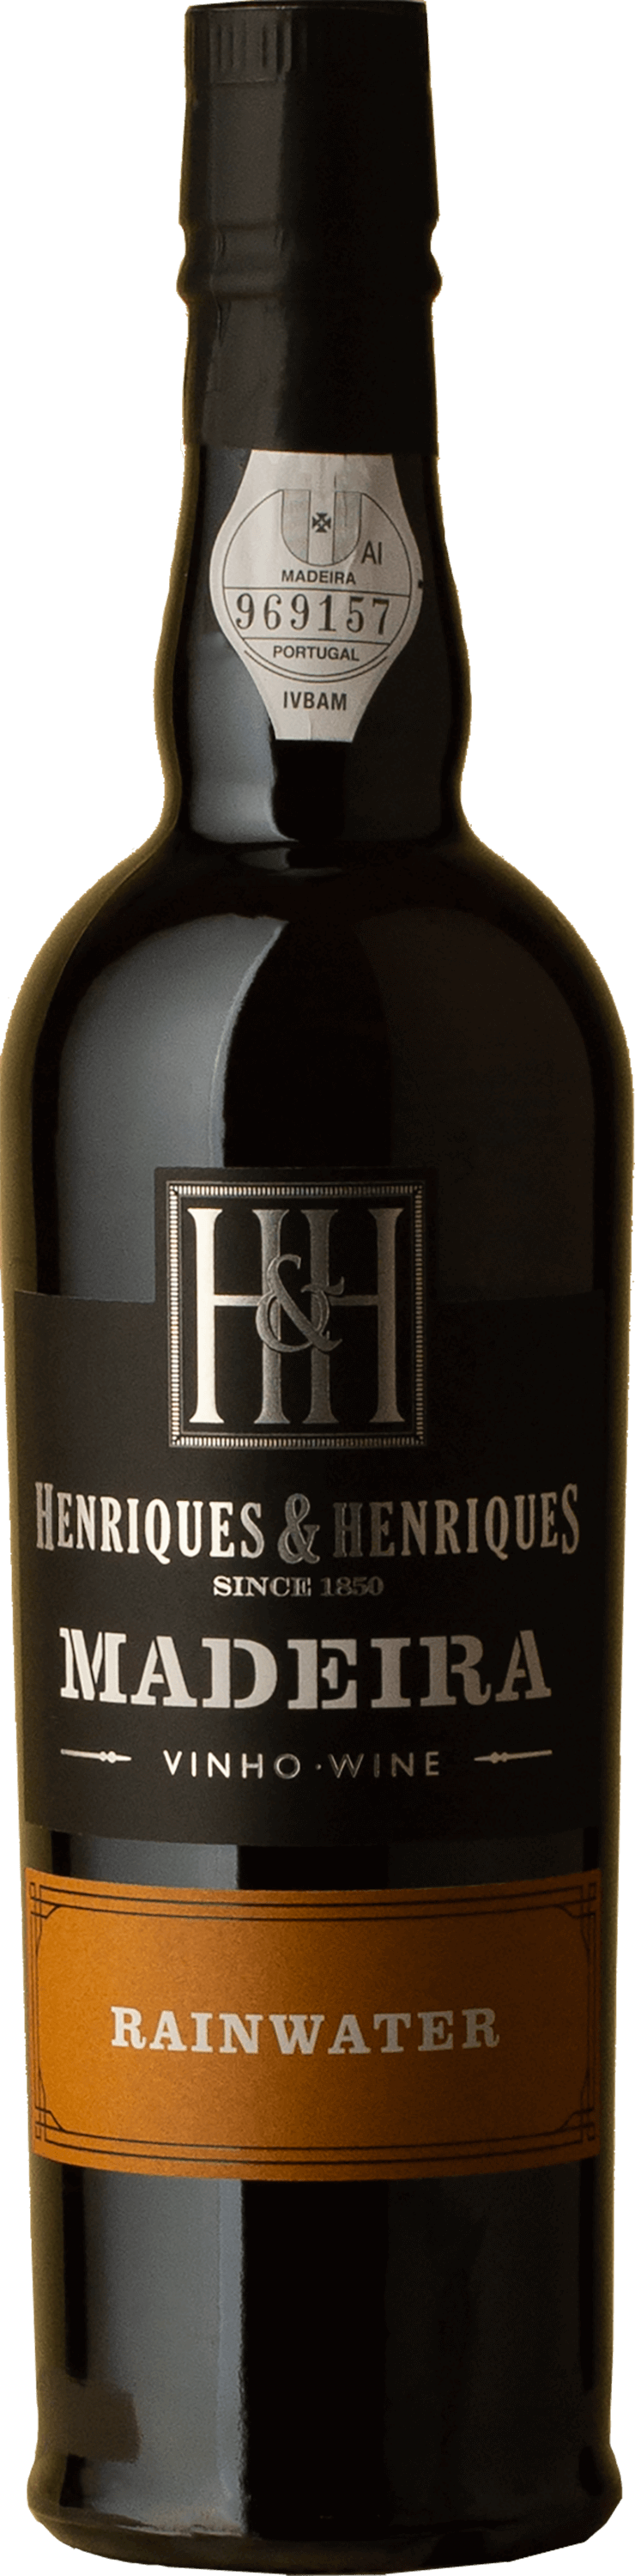 Henriques & Henriques - Rainwater Medium Dry 3yo Madeira NV 500mL Not Wine